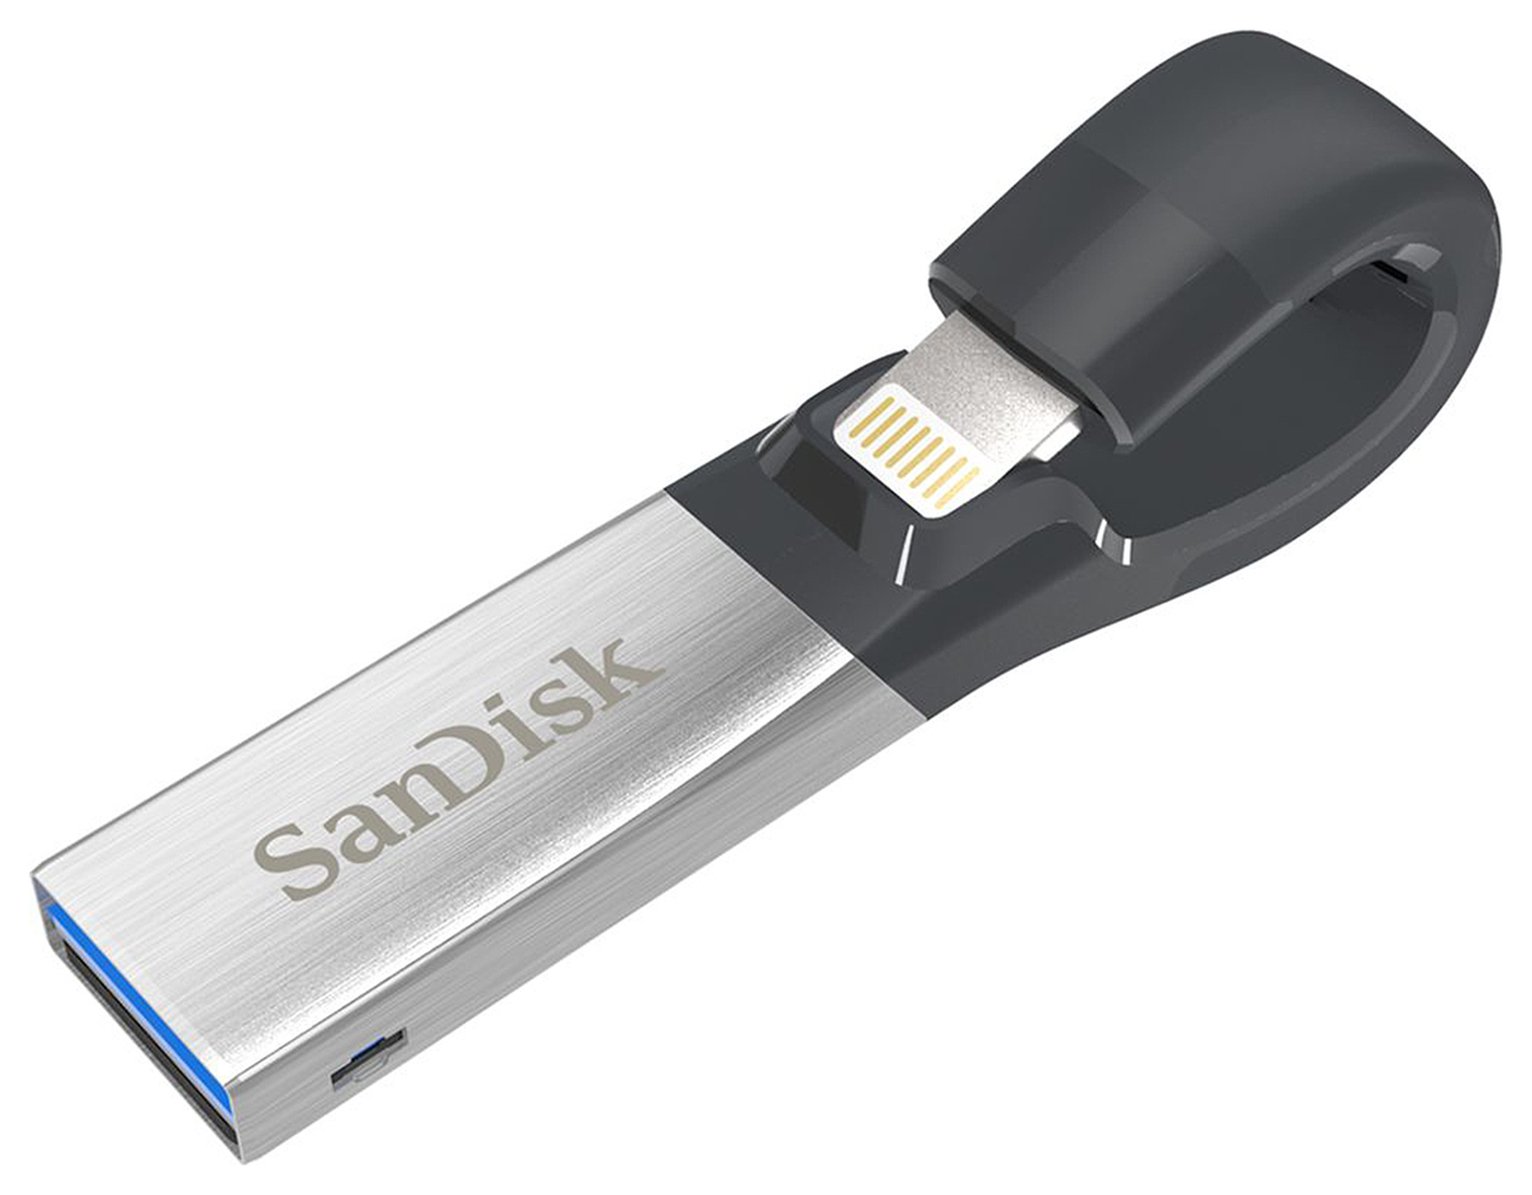 SanDisk iXpand USB 2.0 Flash Drive for iPhone/iPad - 16GB